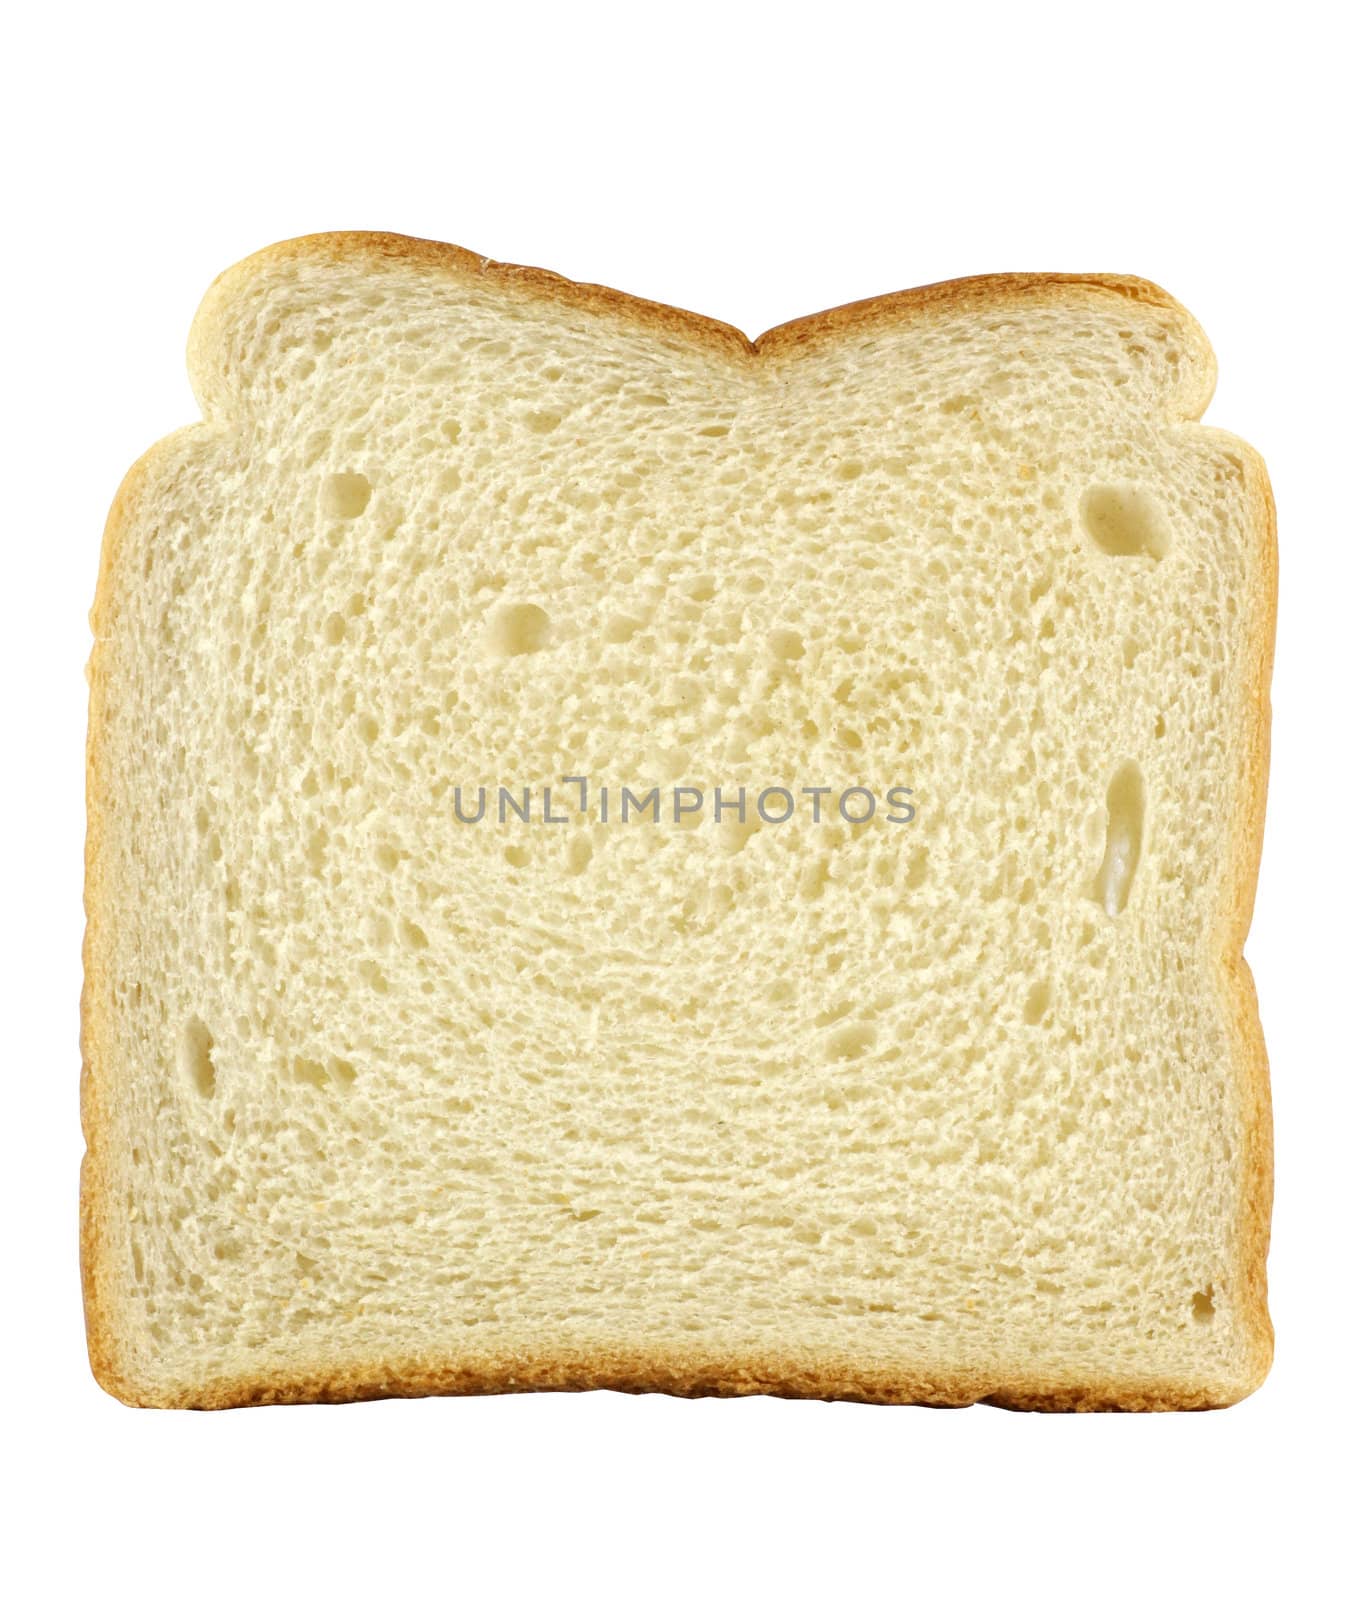 Slice of bread by Georgios